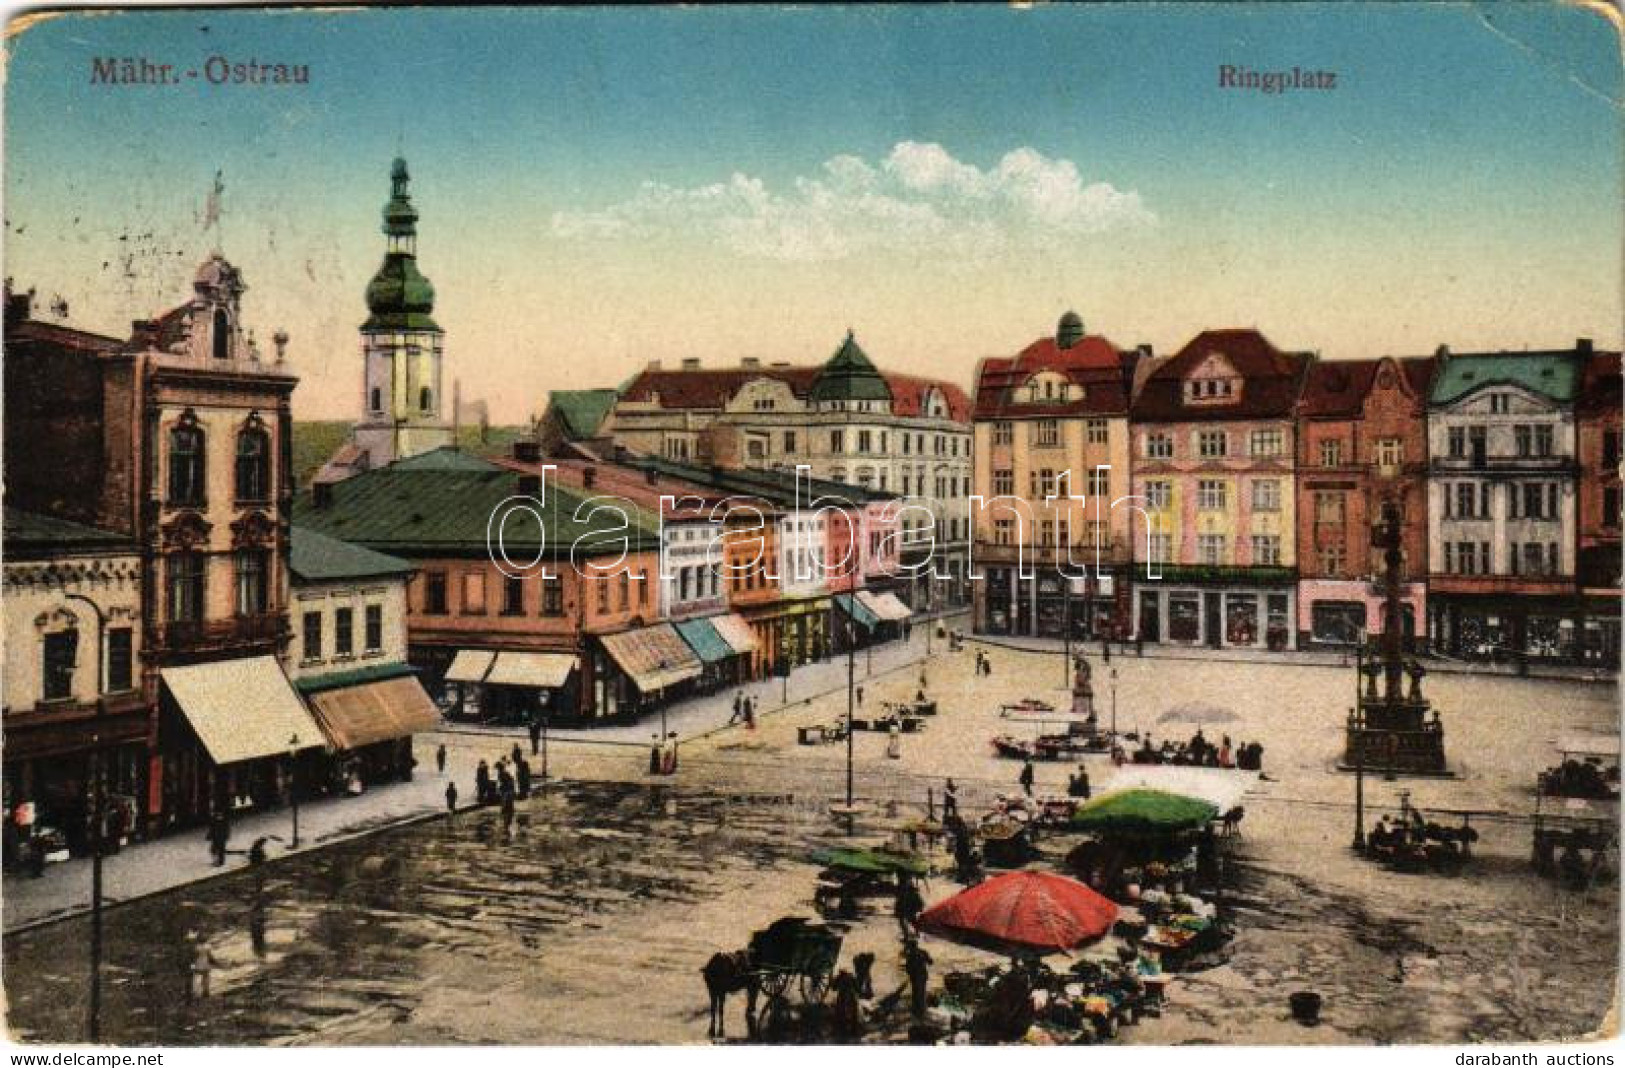 T2/T3 1917 Ostrava, Moravská Ostrava, Mährisch Ostrau; Ringplatz / Square, Market, Shops (EK) - Non Classés